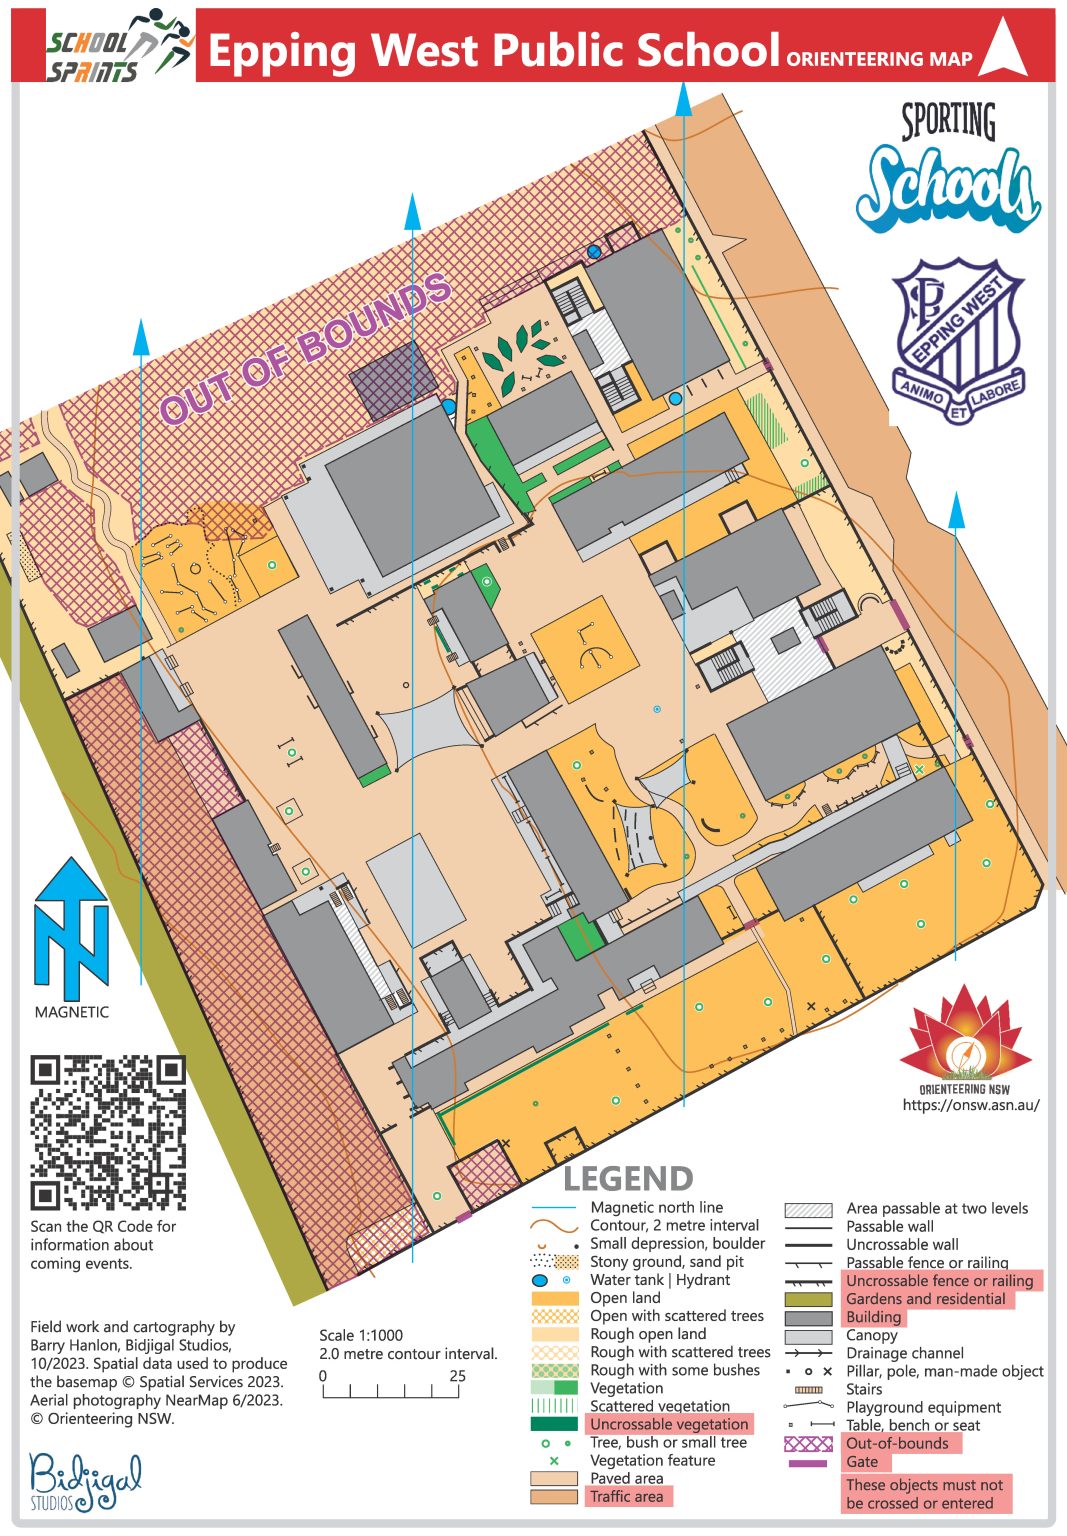 Sample school orienteering map